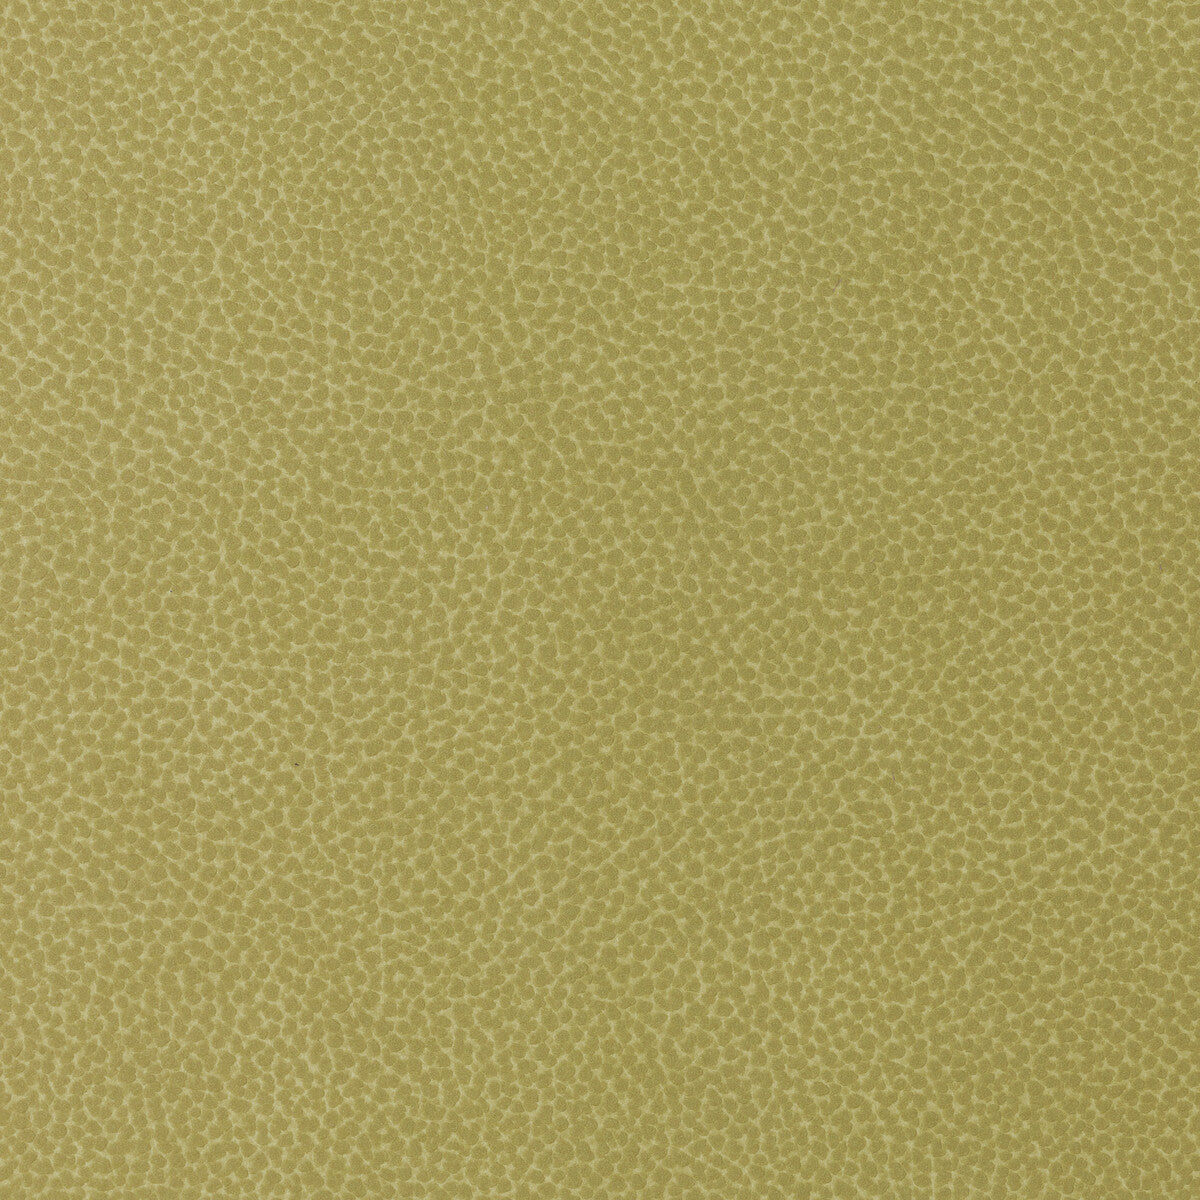 Kravet Design fabric in sweetgum-340 color - pattern SWEETGUM.340.0 - by Kravet Design